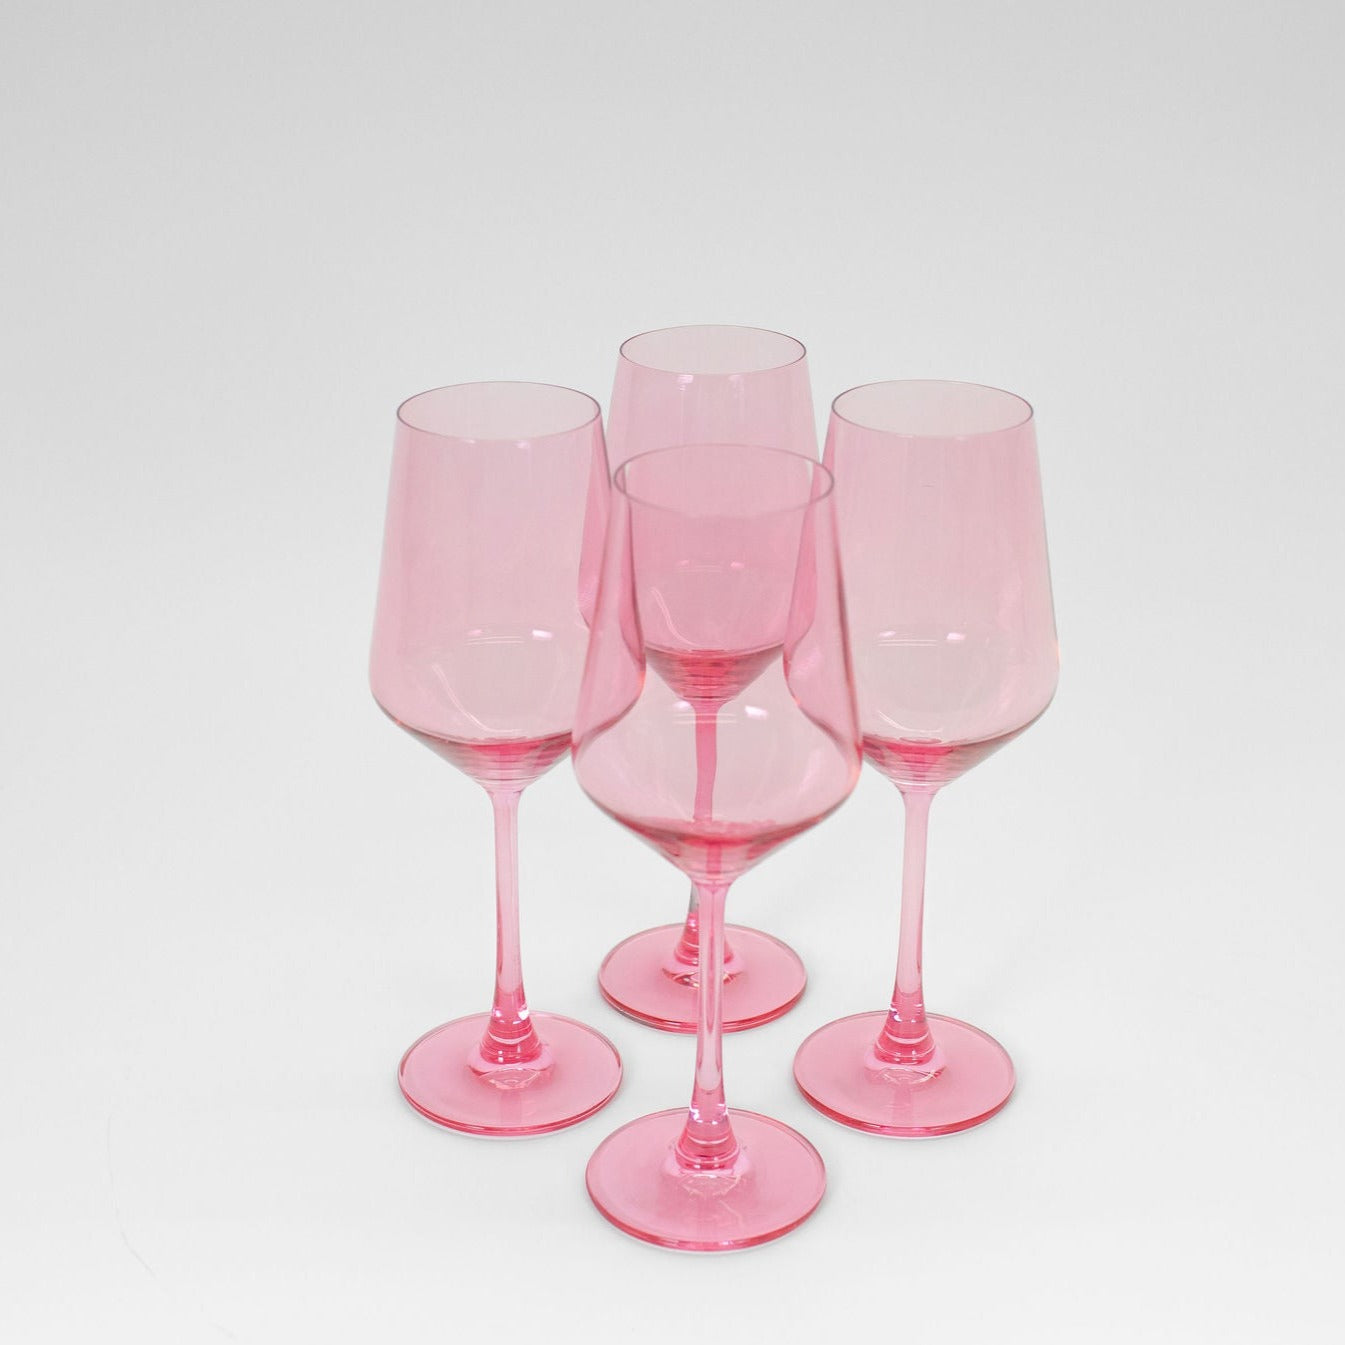 Colored Wine Glasses Set of 4 - Bubblegum Pink